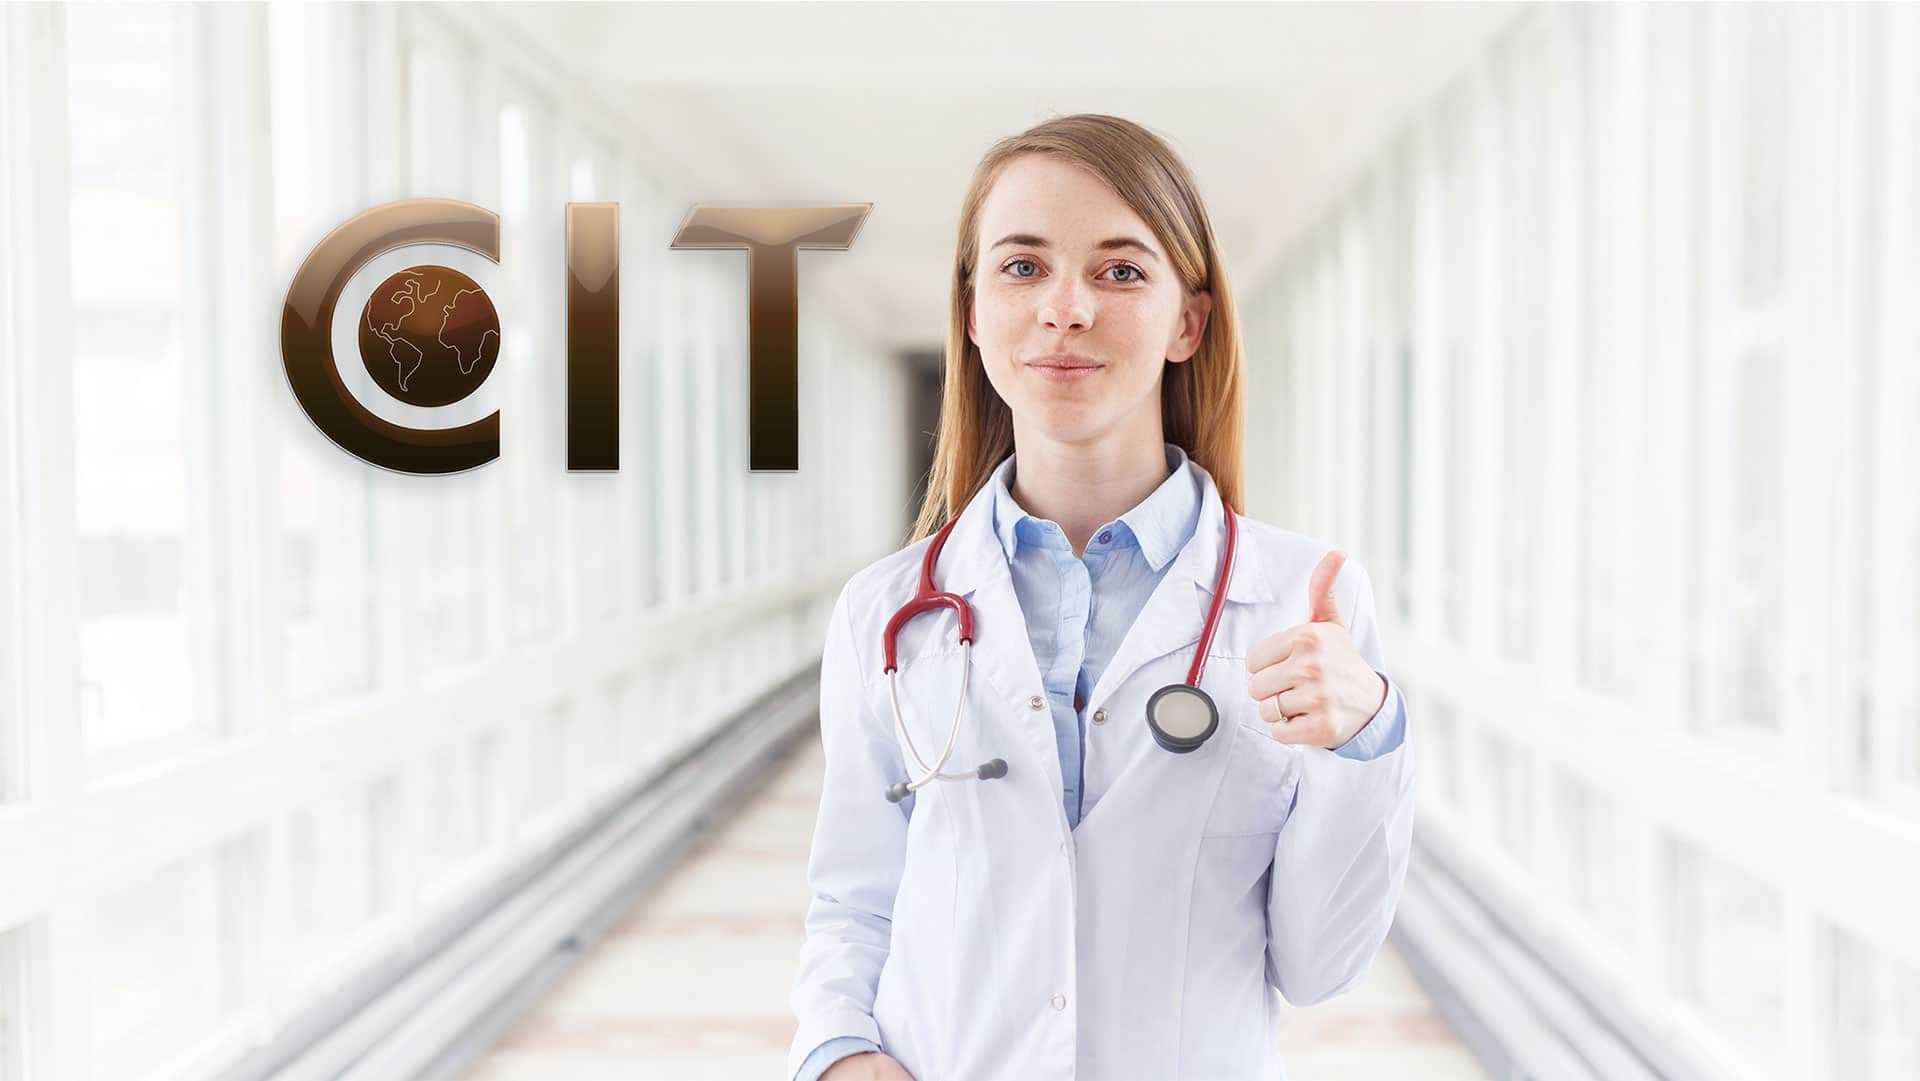 Doctors use CIT Cal Interpreting & Translations